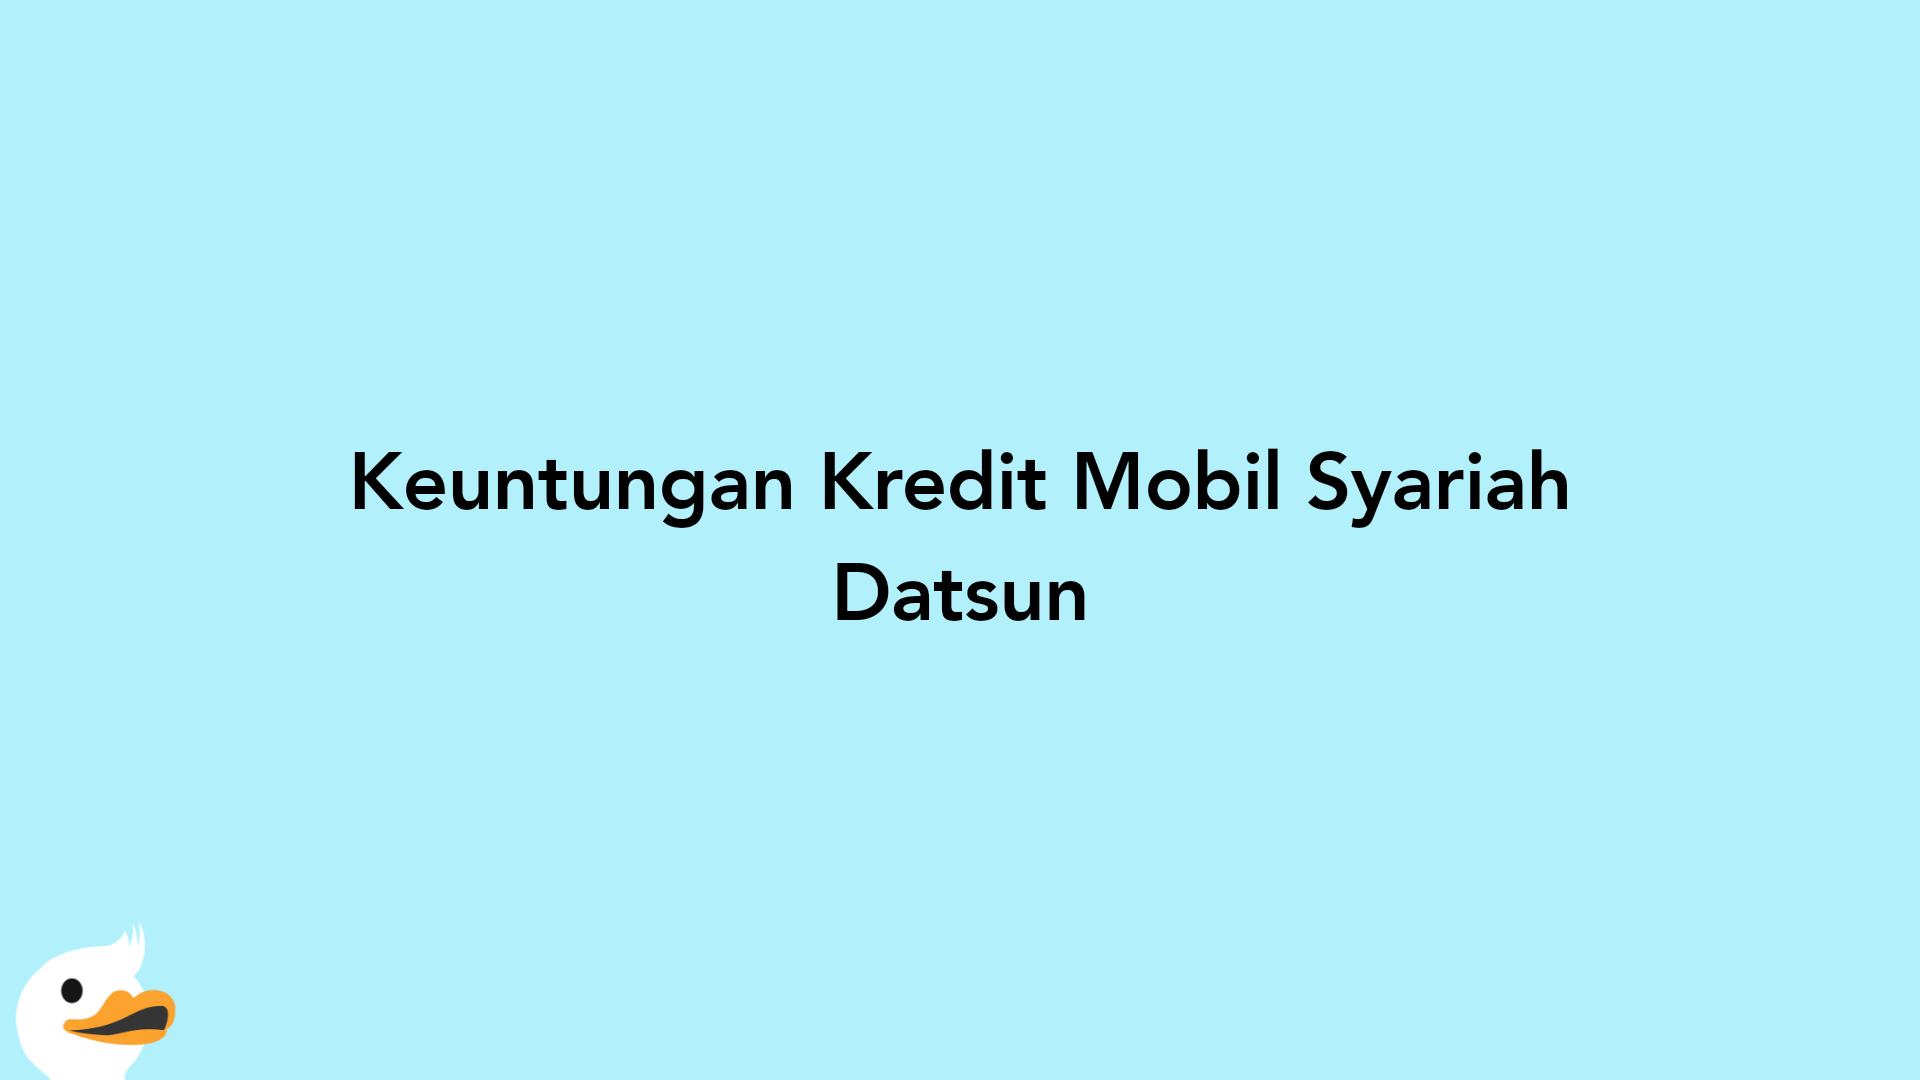 Keuntungan Kredit Mobil Syariah Datsun